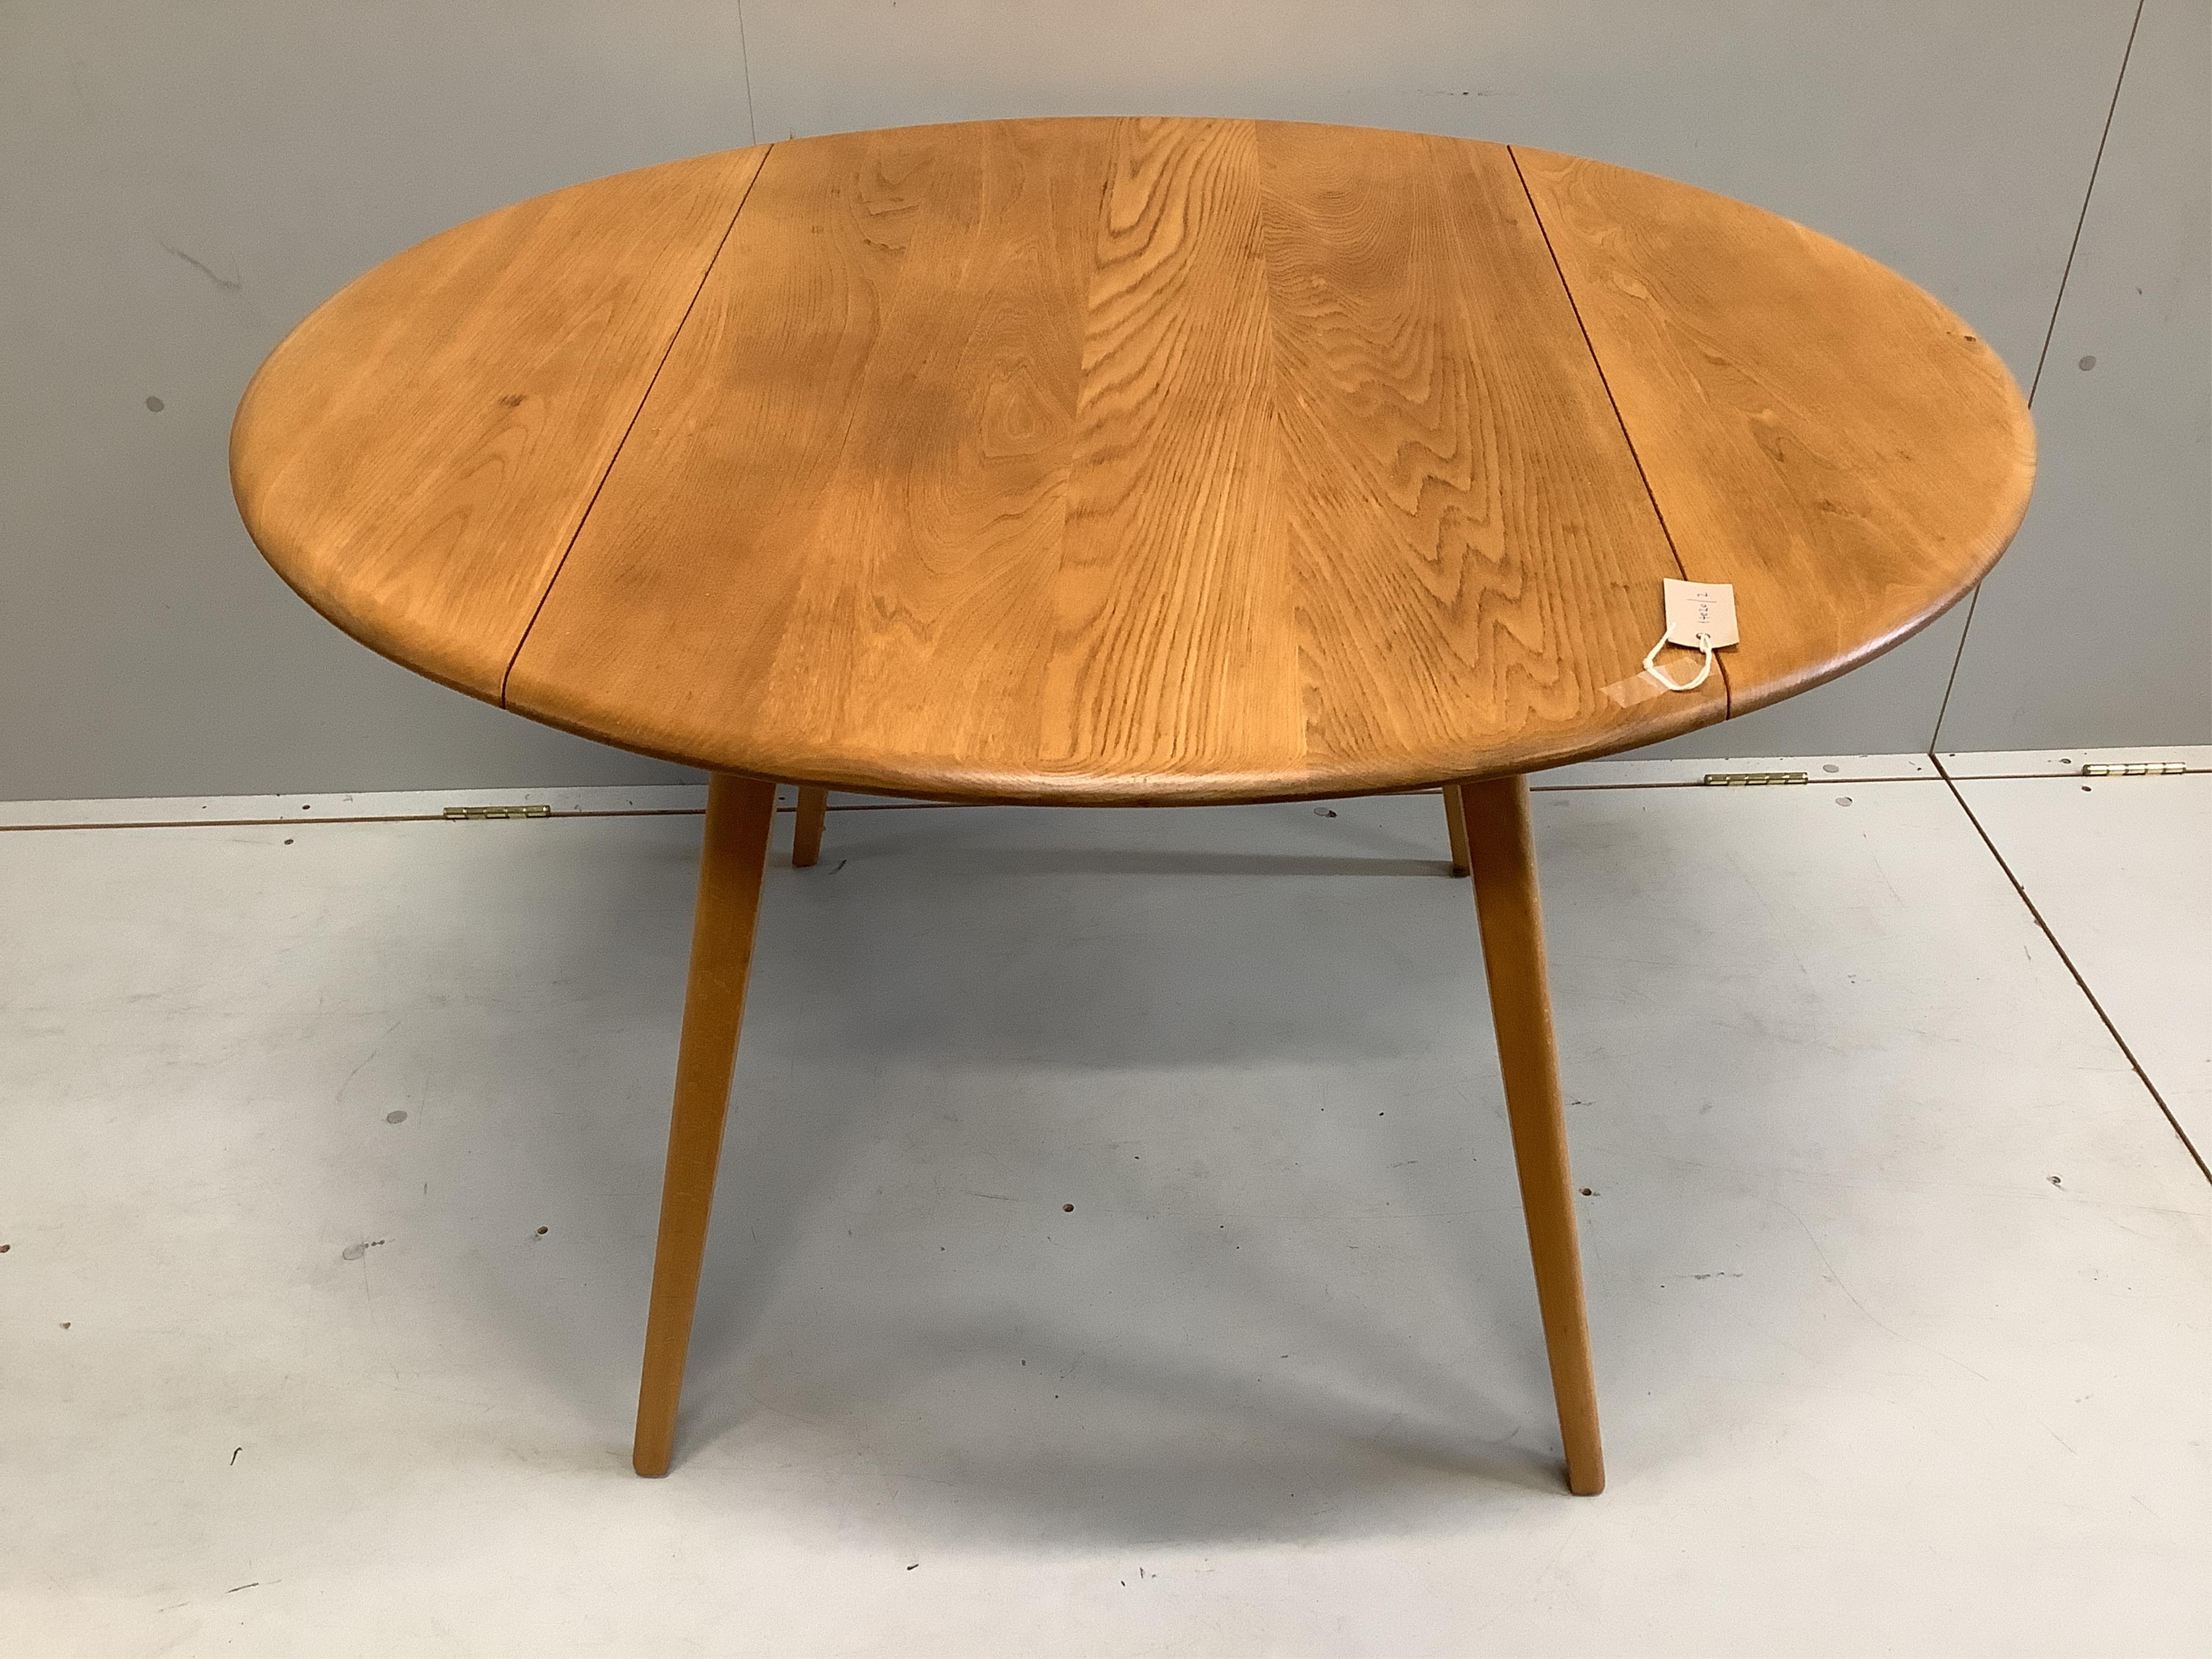 An Ercol elm drop leaf dining table, width 102cm, depth 64cm, height 71cm